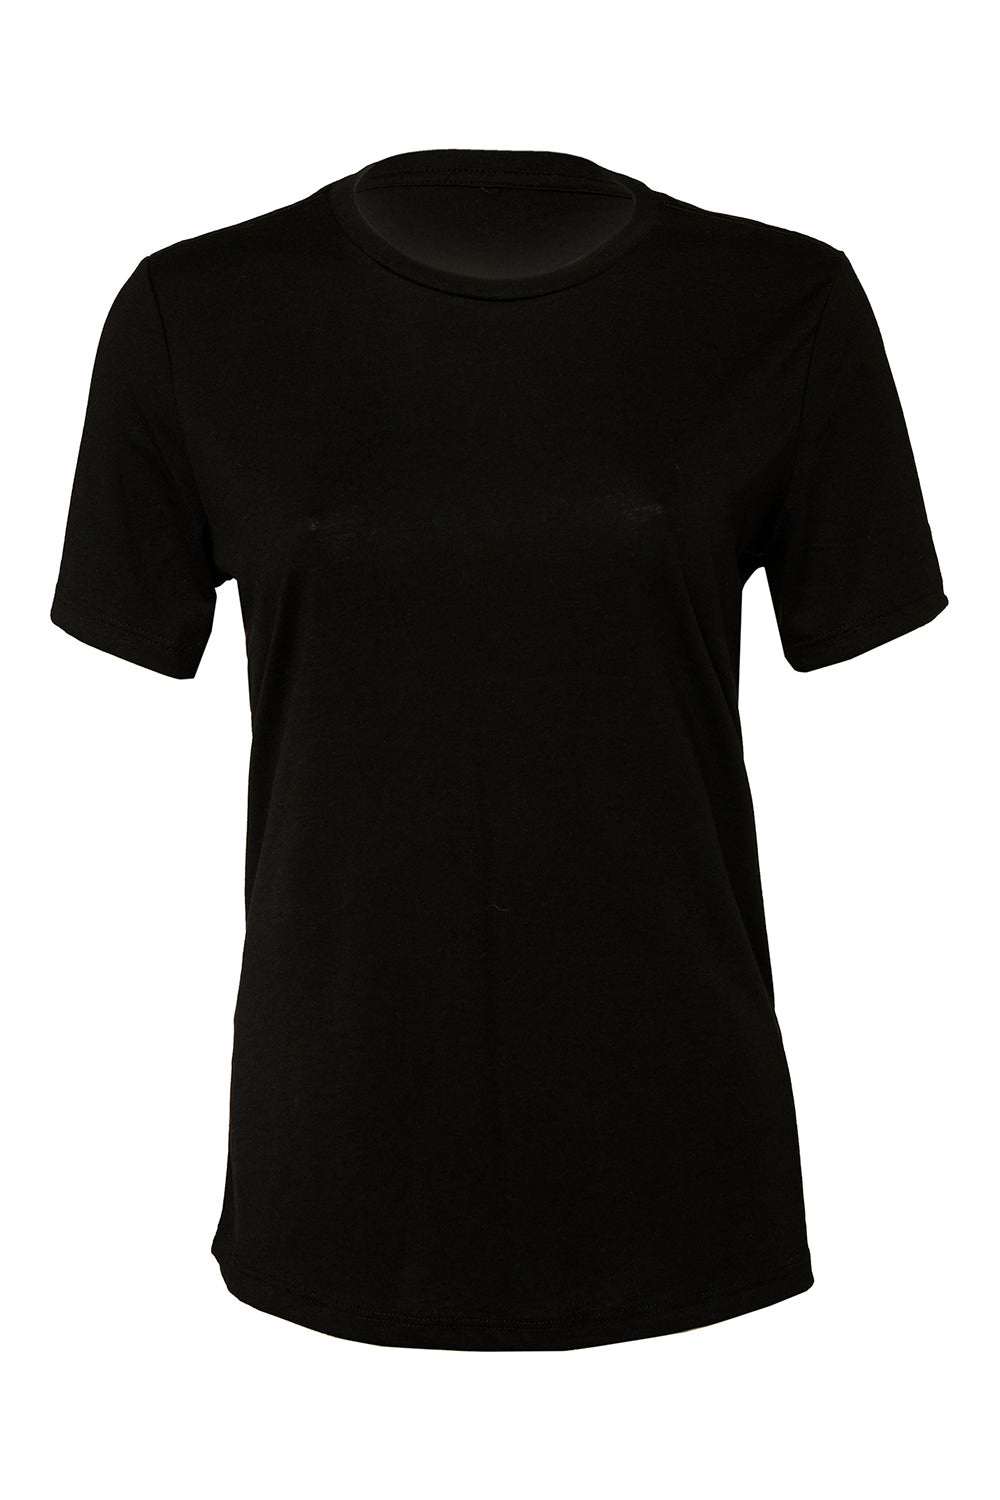 Bella + Canvas BC6413 Womens Short Sleeve Crewneck T-Shirt Solid Black Flat Front